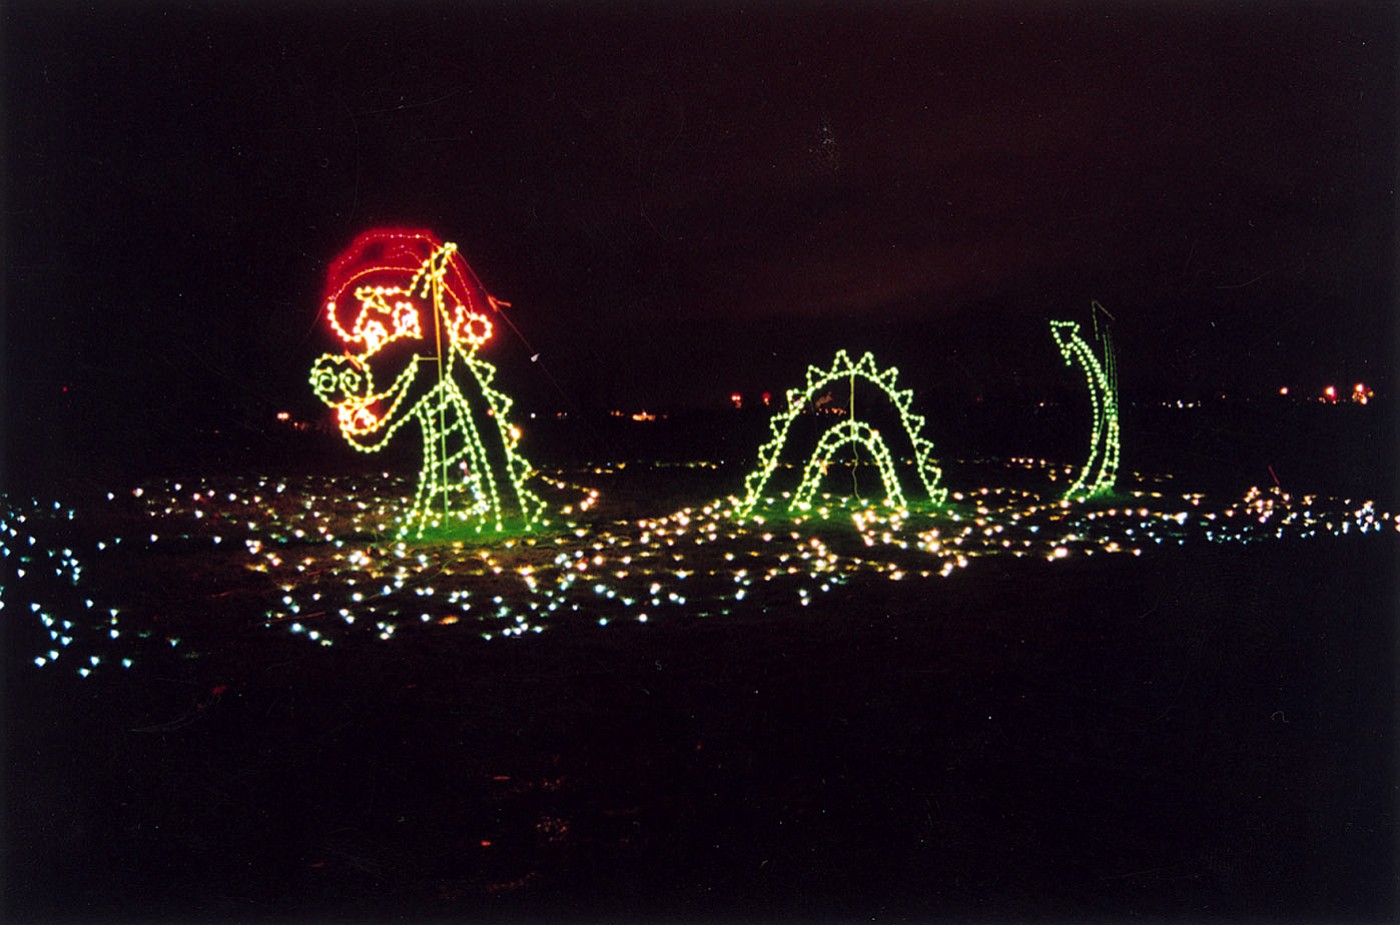 The annual Winter Wonderland lights display takes place November 23 through January 1, 2007 at Portland International Raceway.